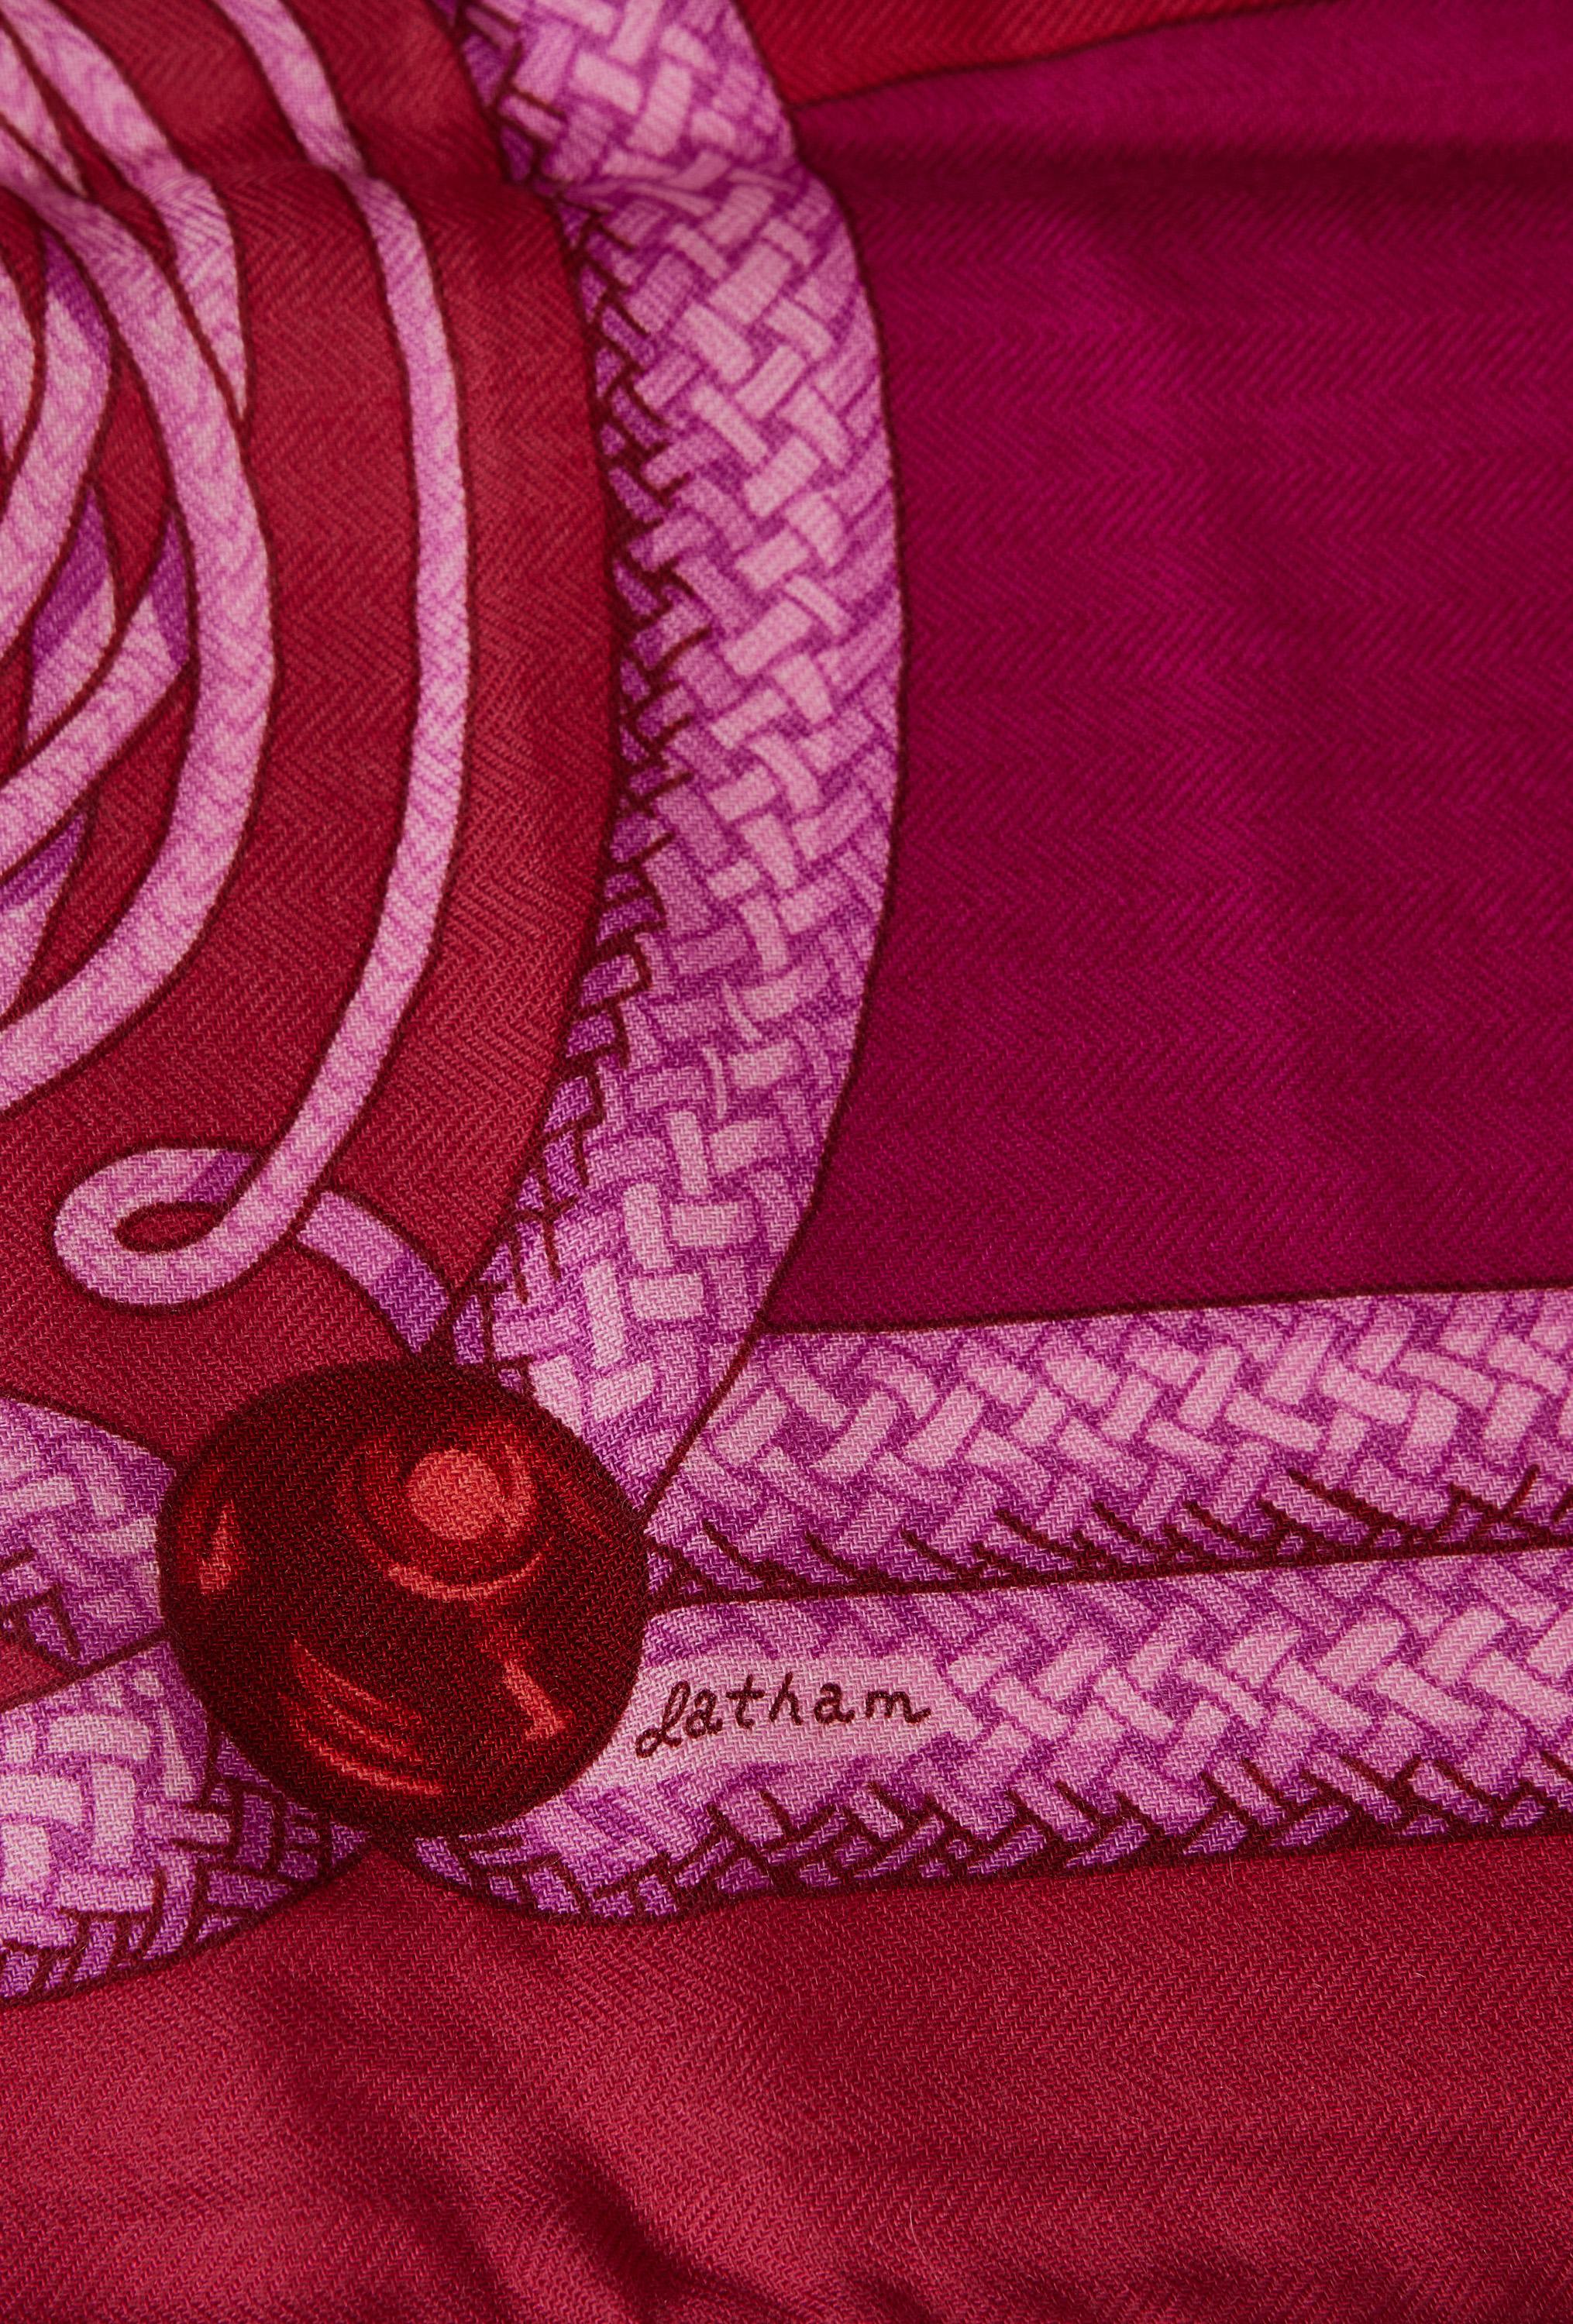 New Hermès Brandenbourgs Pink Shawl in Box 2